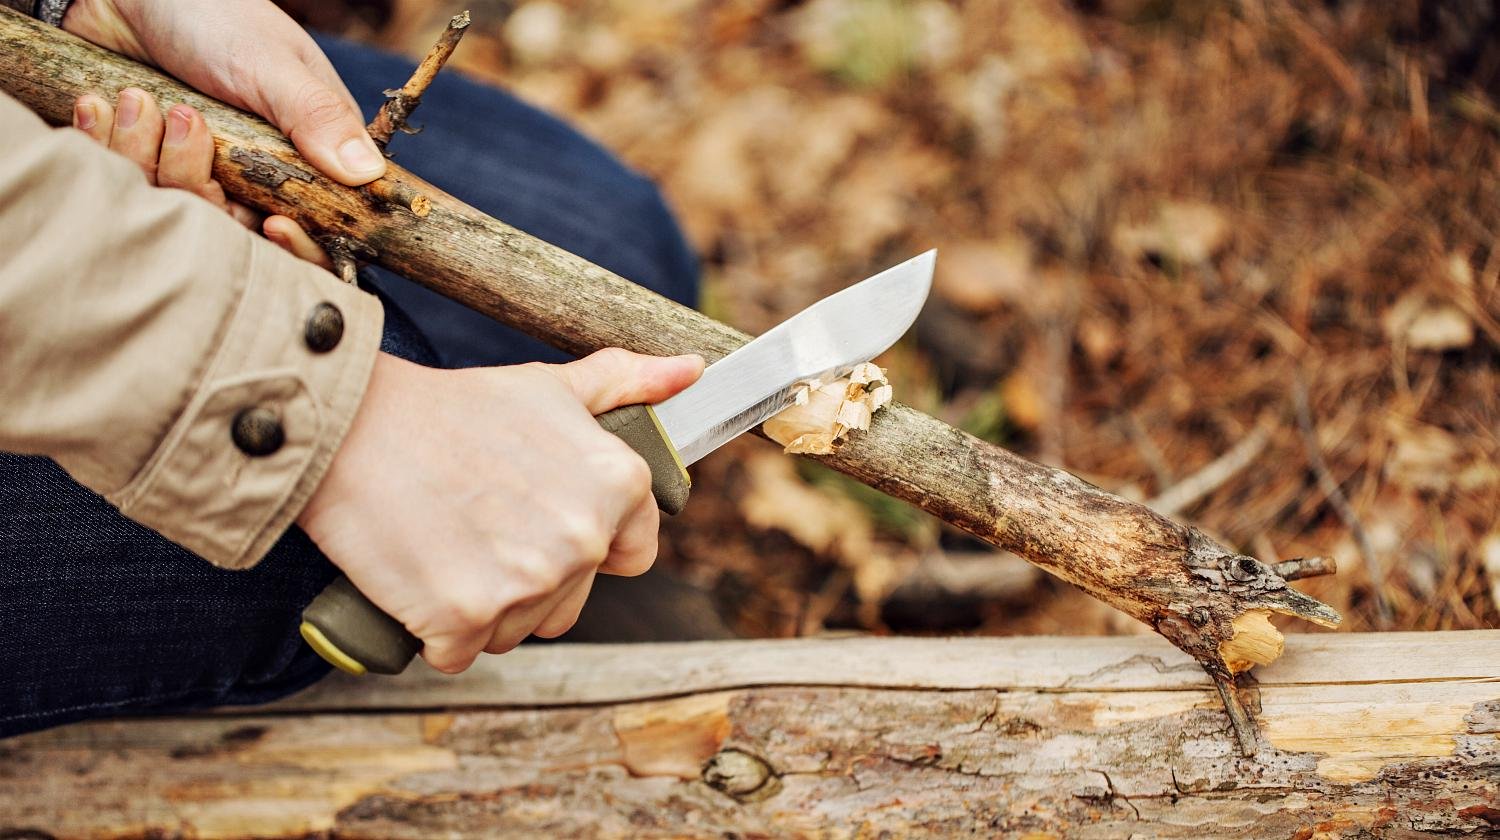 man-whittling-wood-knife-bushcraft-skills-ss-Feature - Sondhelm